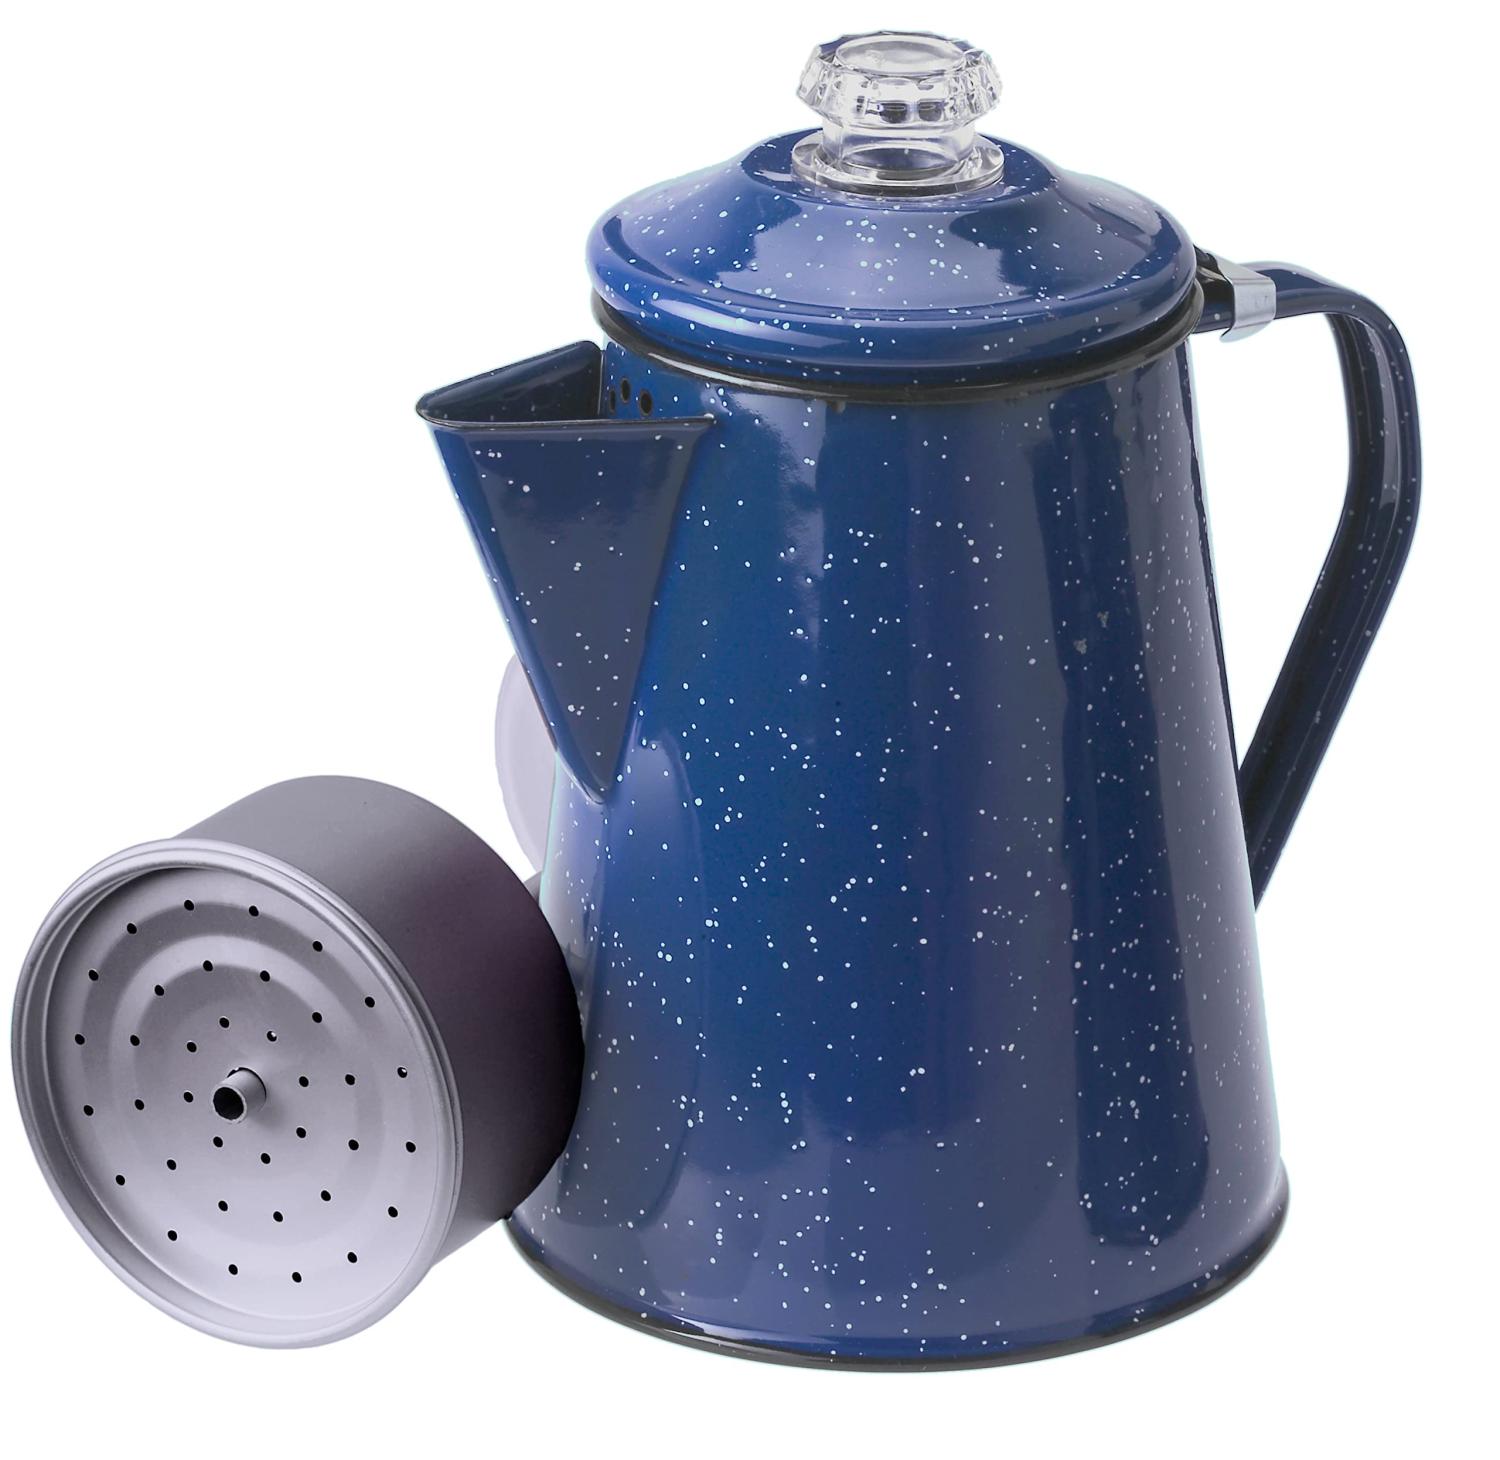 Cook N Home 8-Cup Stainless Steel Stovetop Tea Coffee Percolator